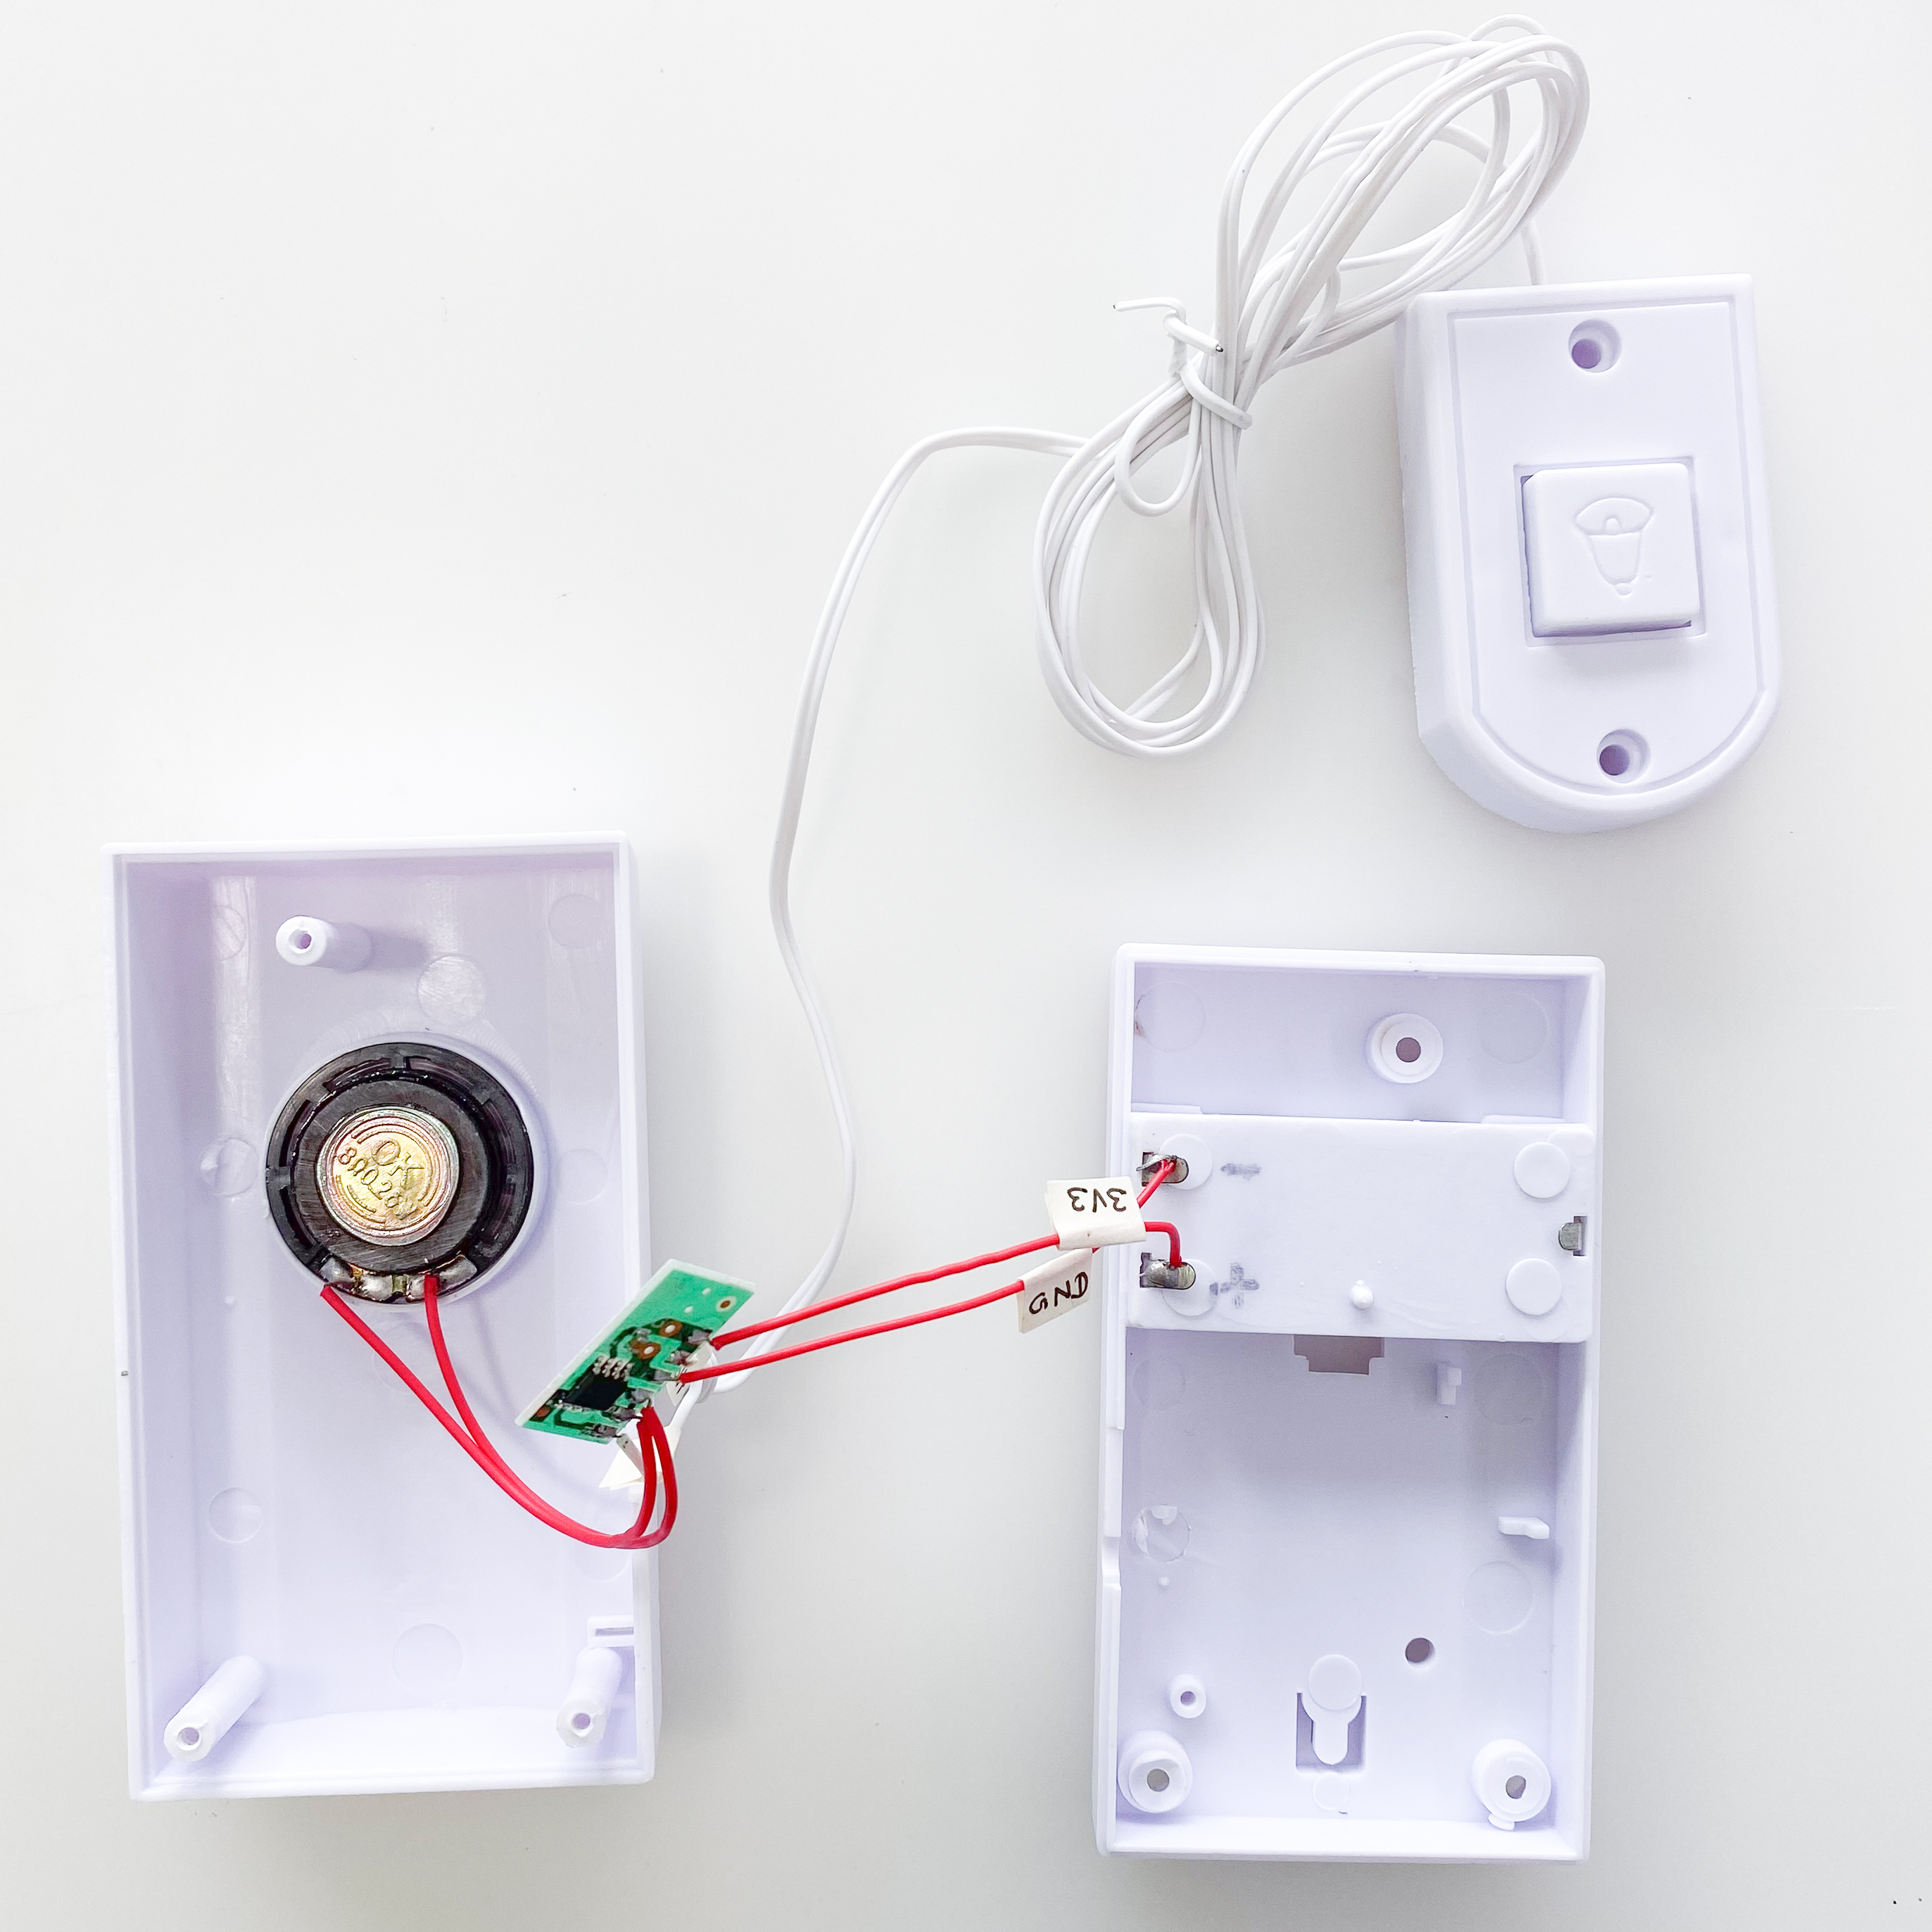 FUERS Wired Guest Welcome Doorbell High Quality Energy-saving Door bell Simple Generous Home Store Security Doorbell Button